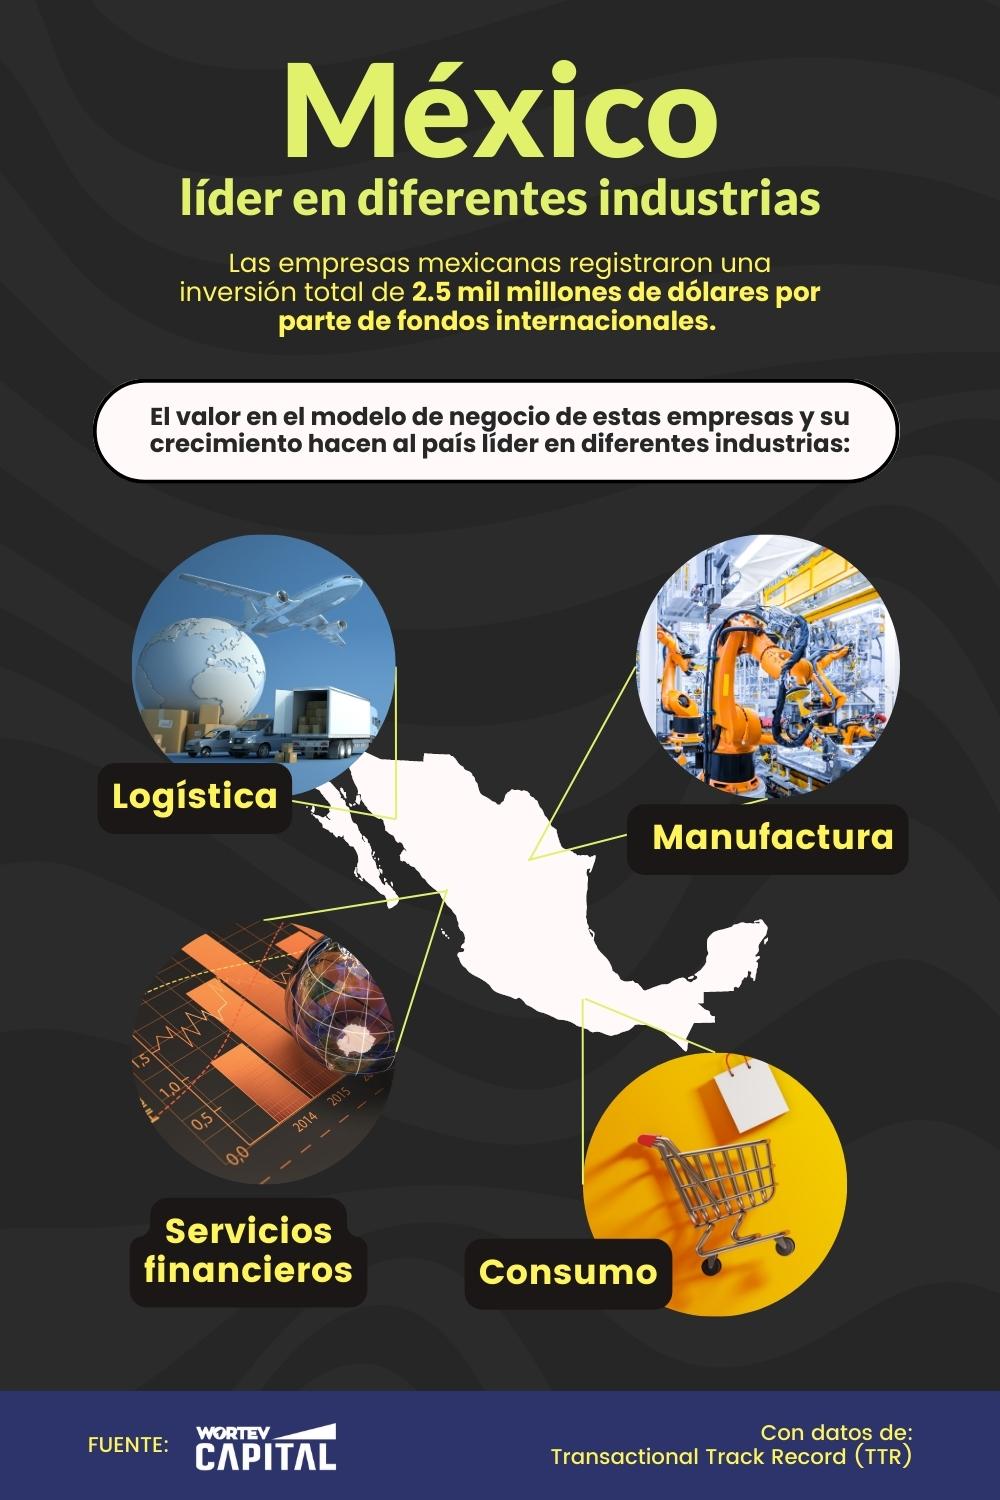  México-líder-en-diferentes-industrias-WORTEV-CAPITAL